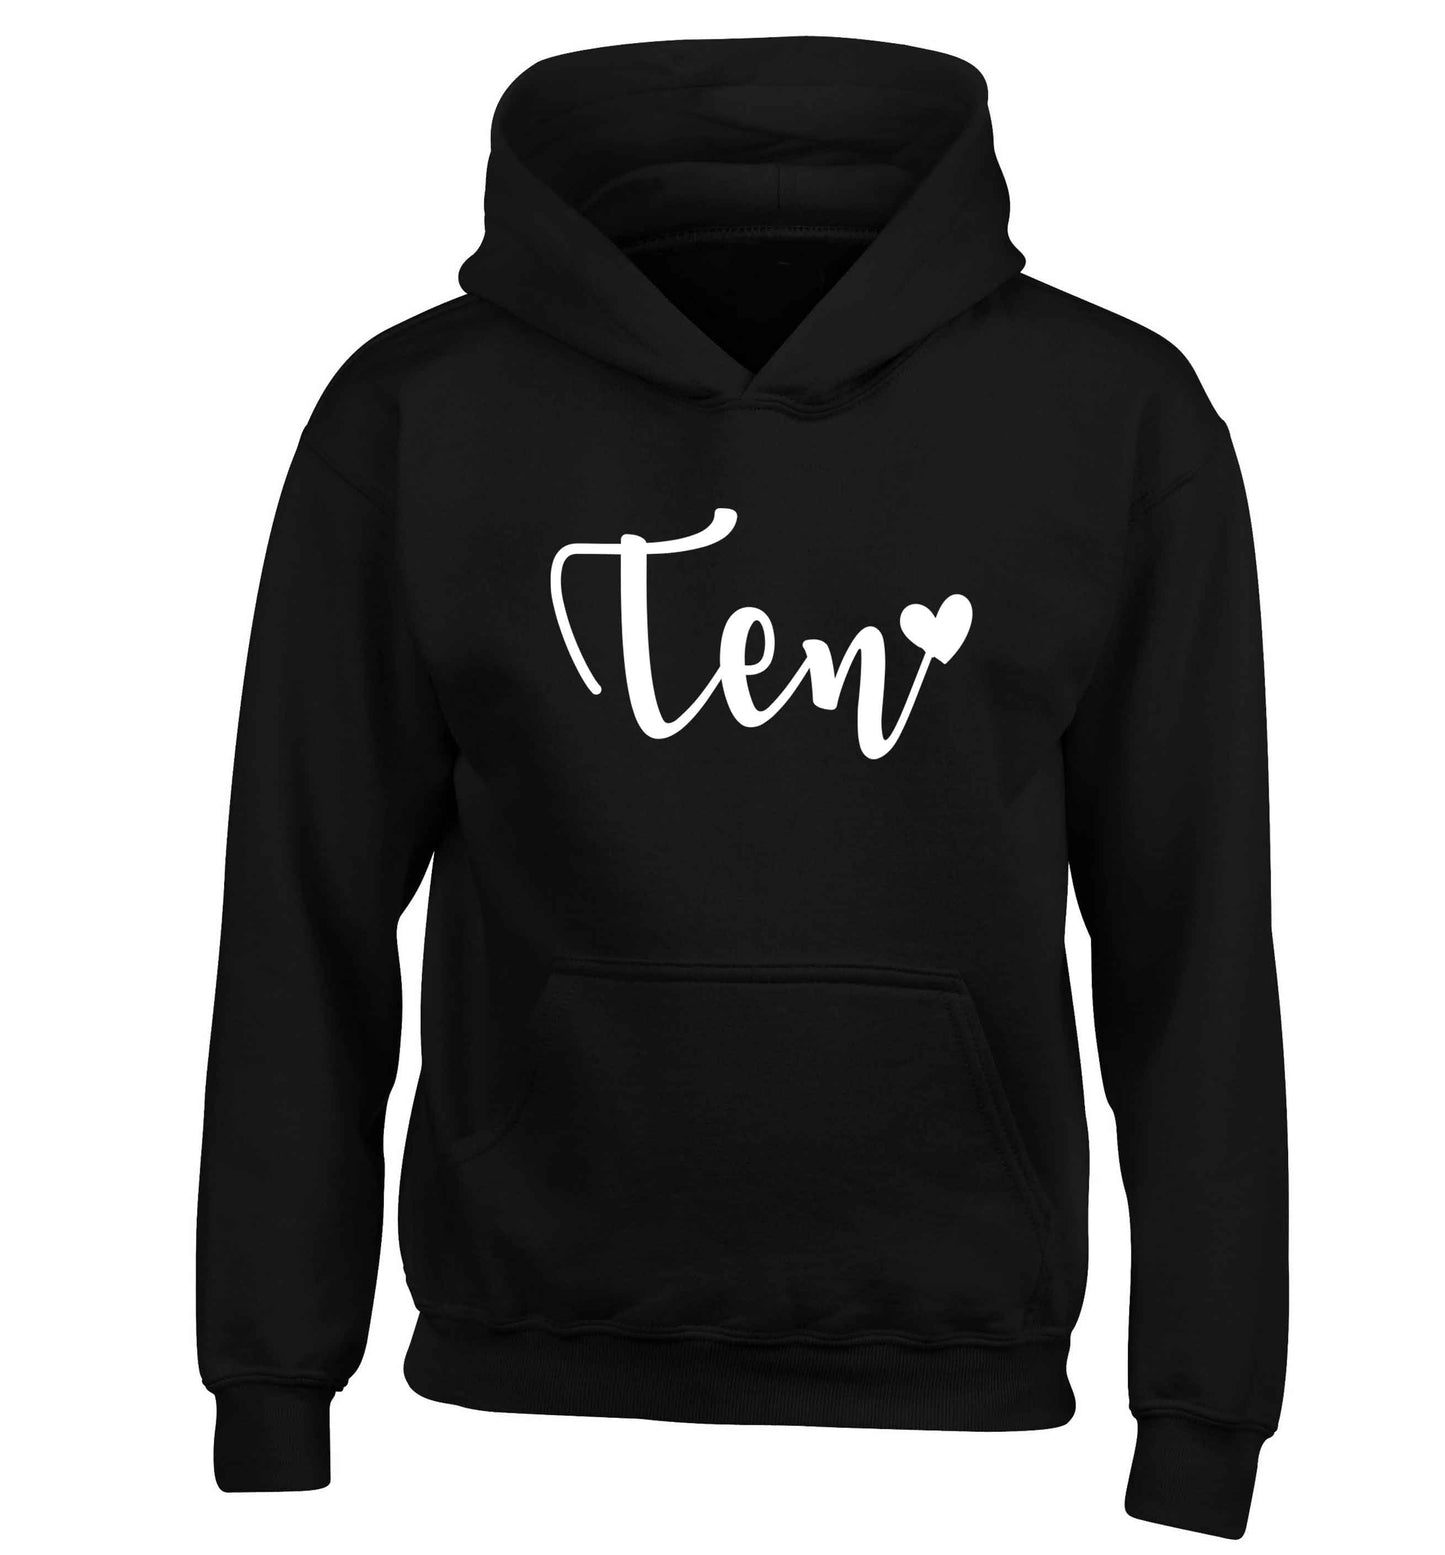 Ten and heart children's black hoodie 12-13 Years